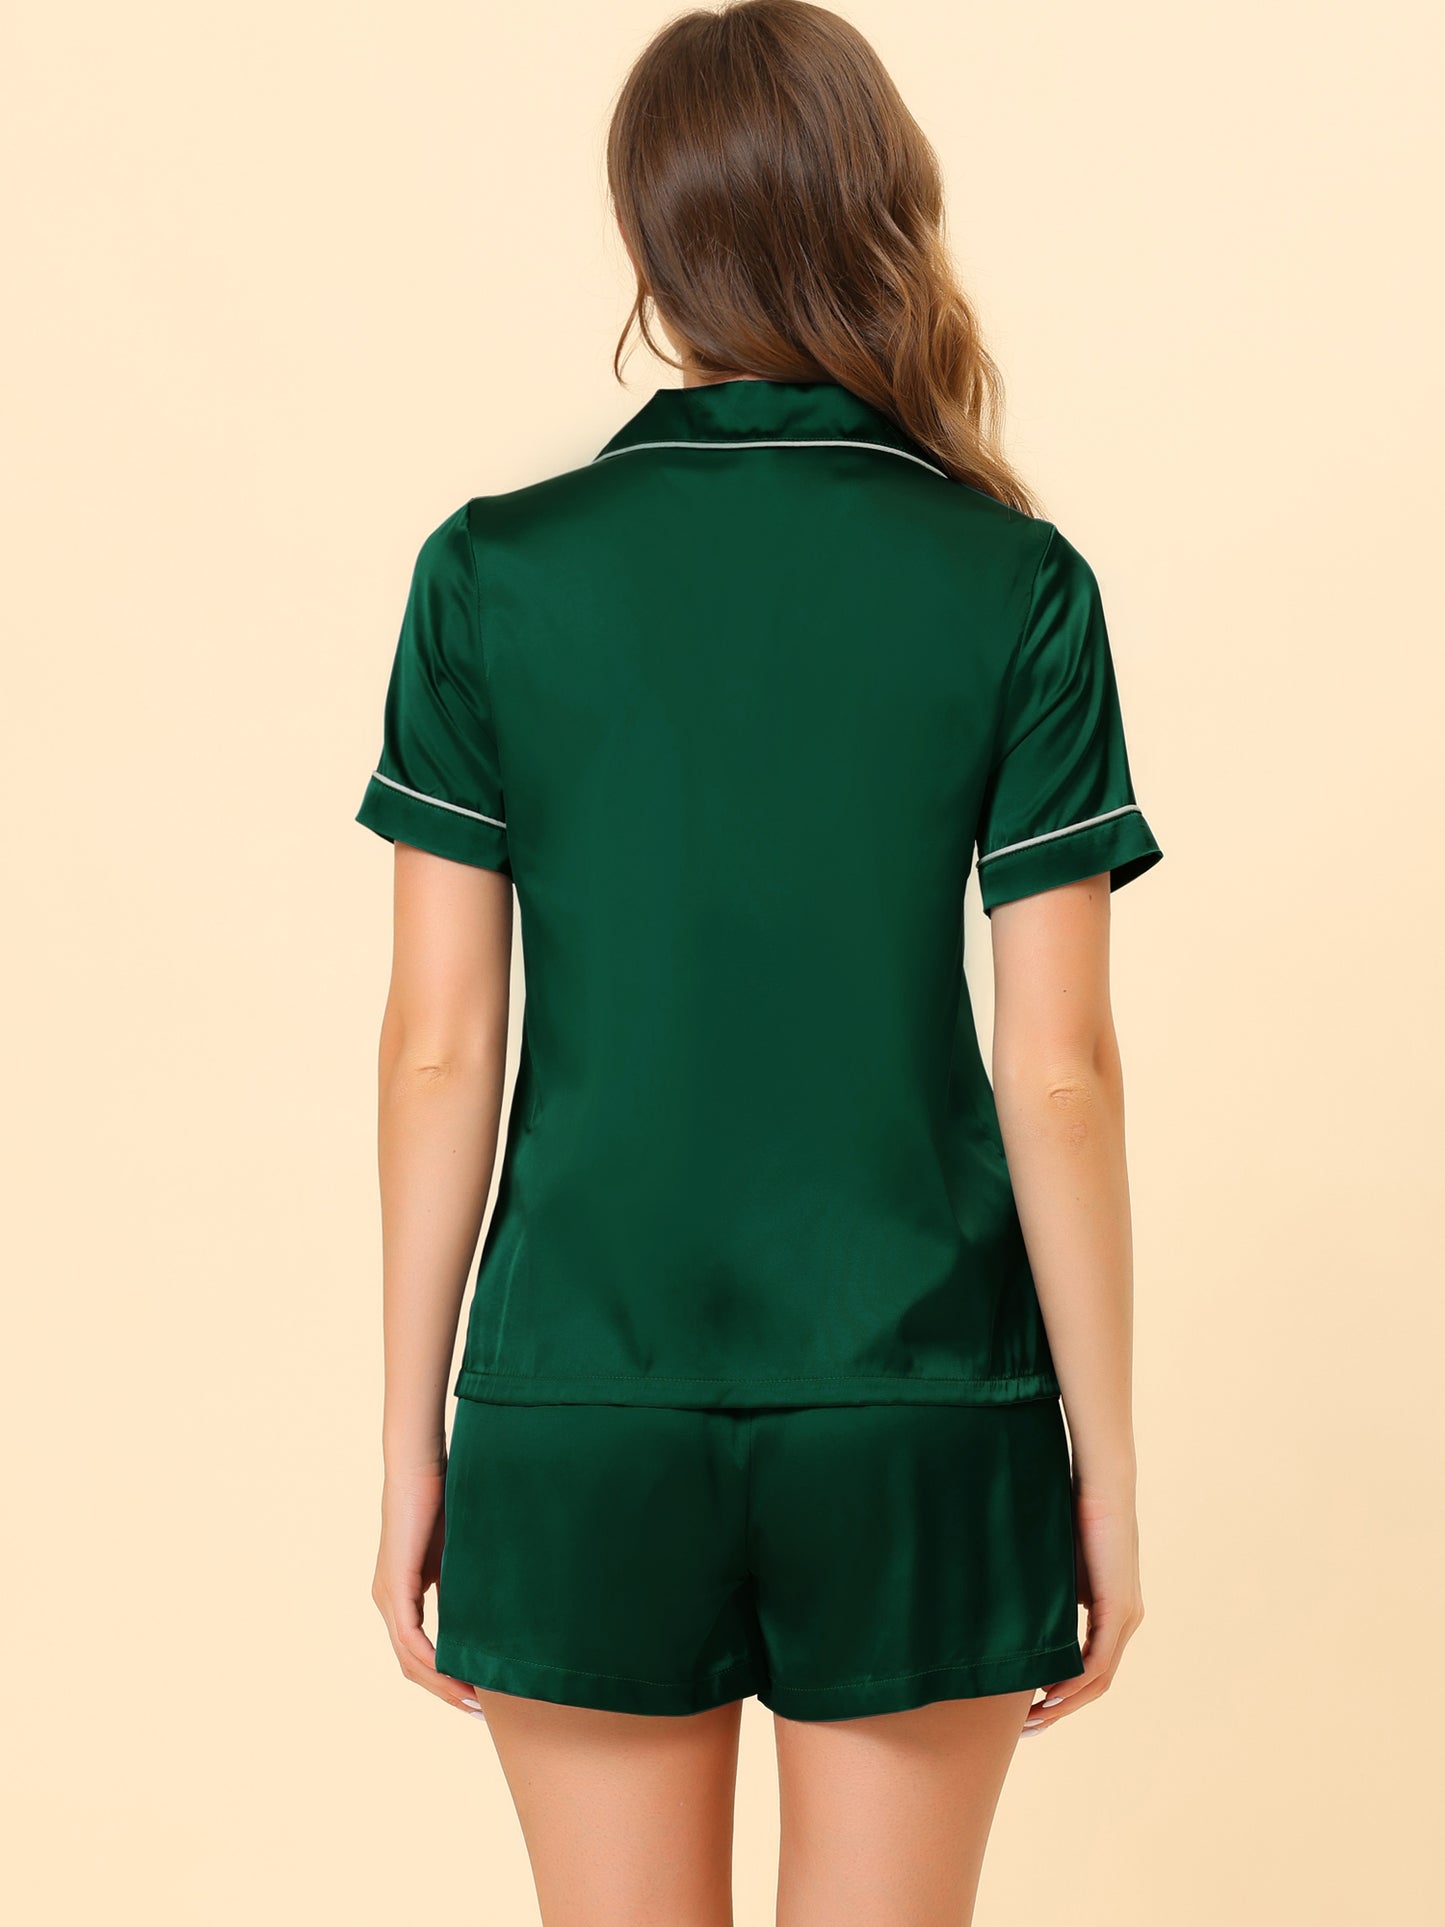 cheibear Pajama Loungewear Short Sleeves Button Down Satin Pj Sets Green